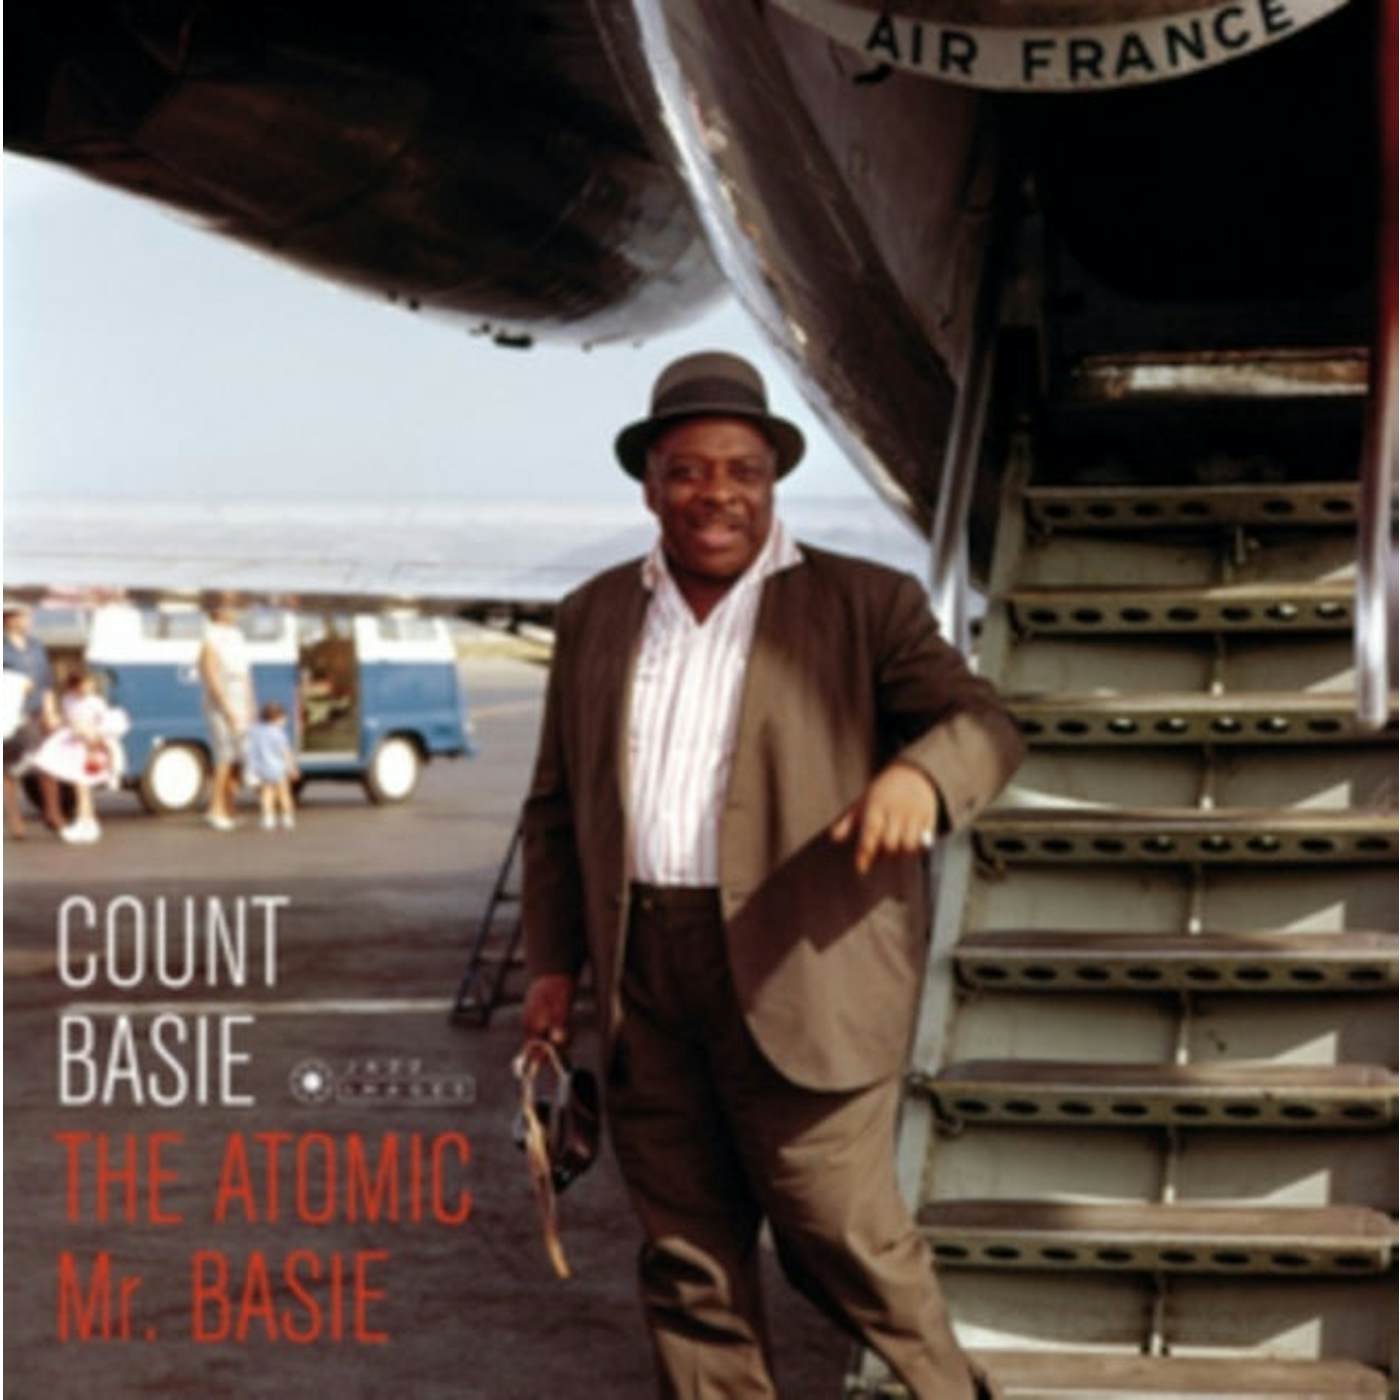 Count Basie LP Vinyl Record - The Atomic Mr.Basie